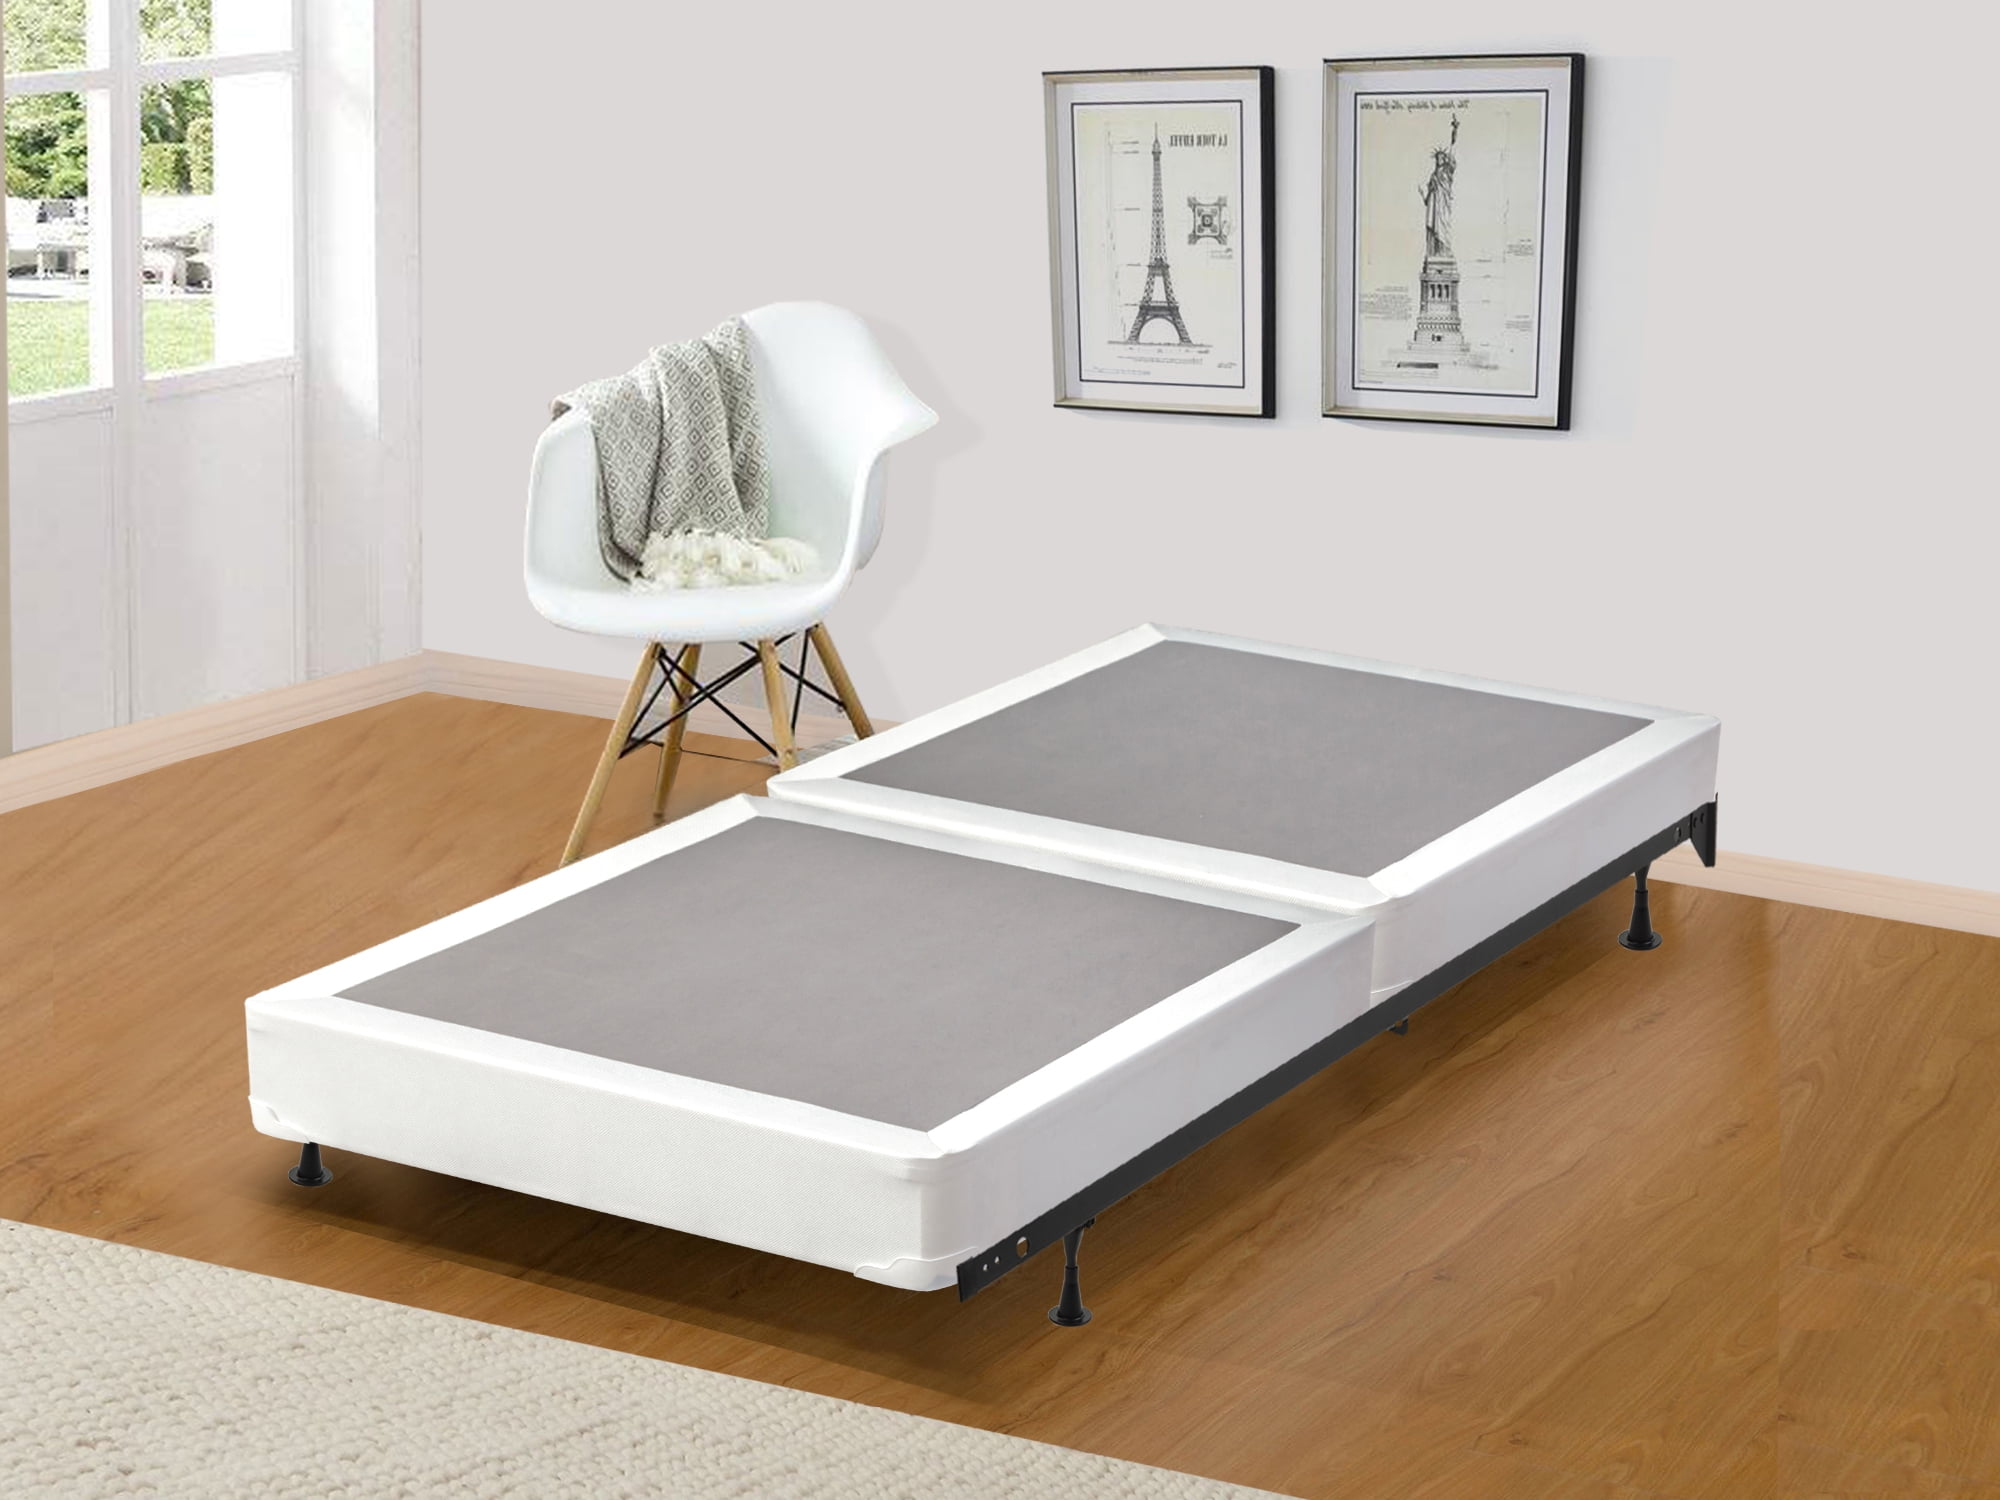 twin bed mattress in a box amazon